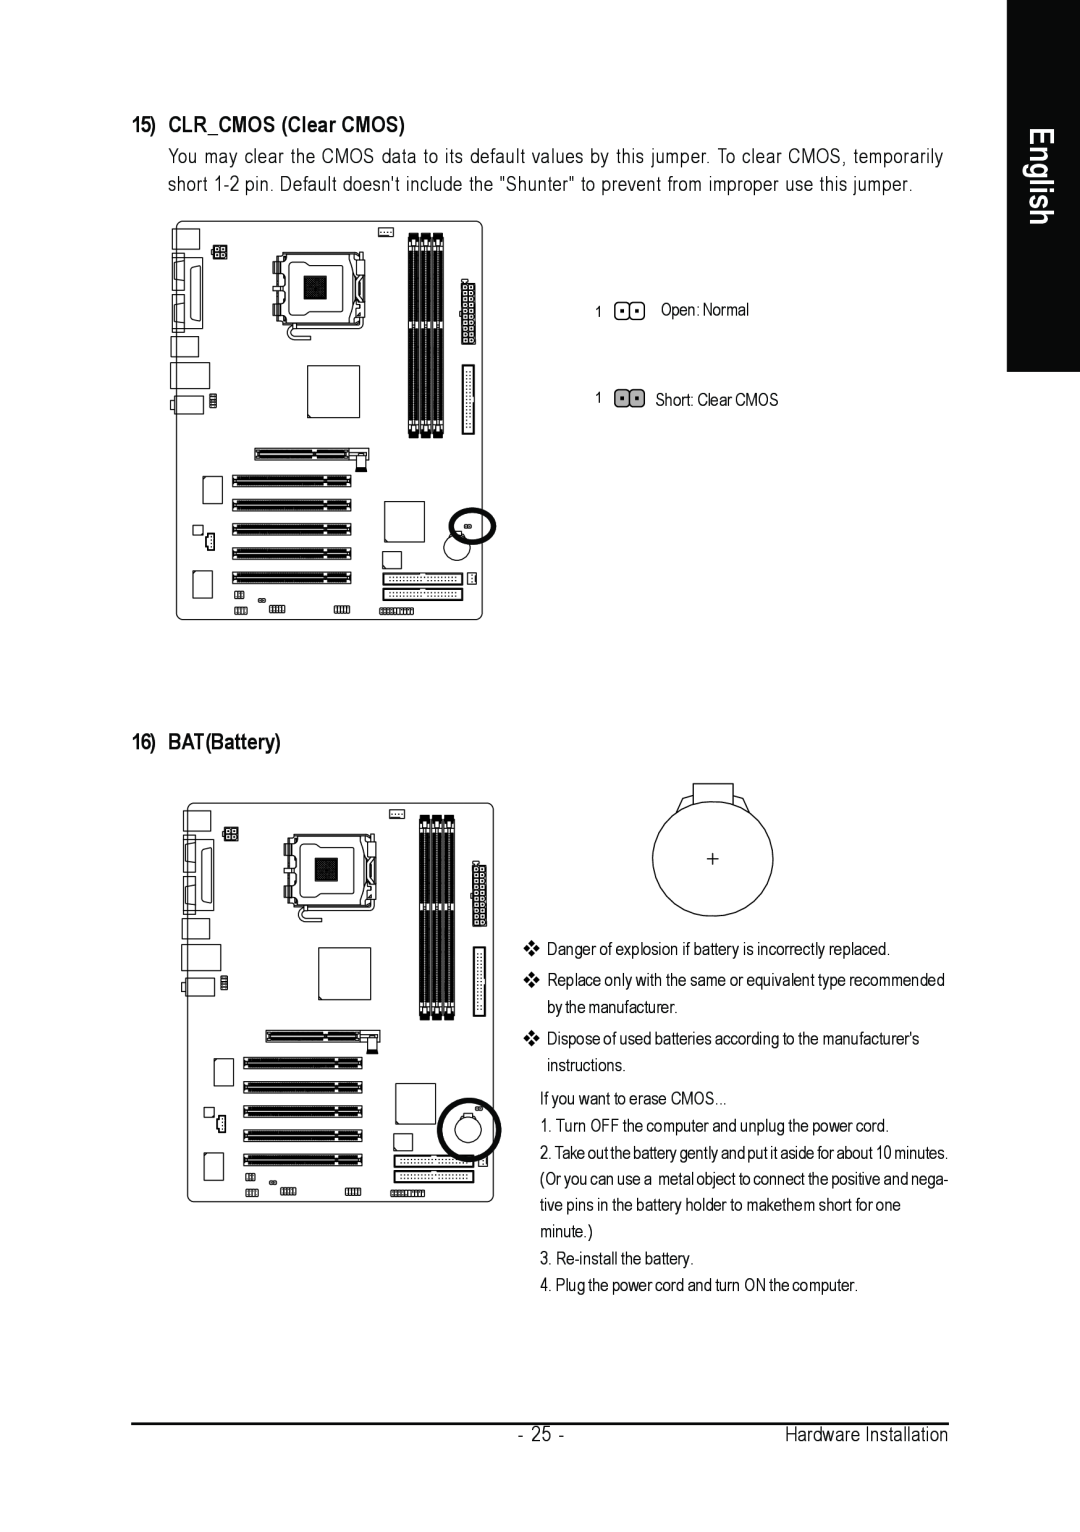 Gigabyte GA-8I845GE775-G user manual CLRCMOS Clear CMOS, BATBattery, English 